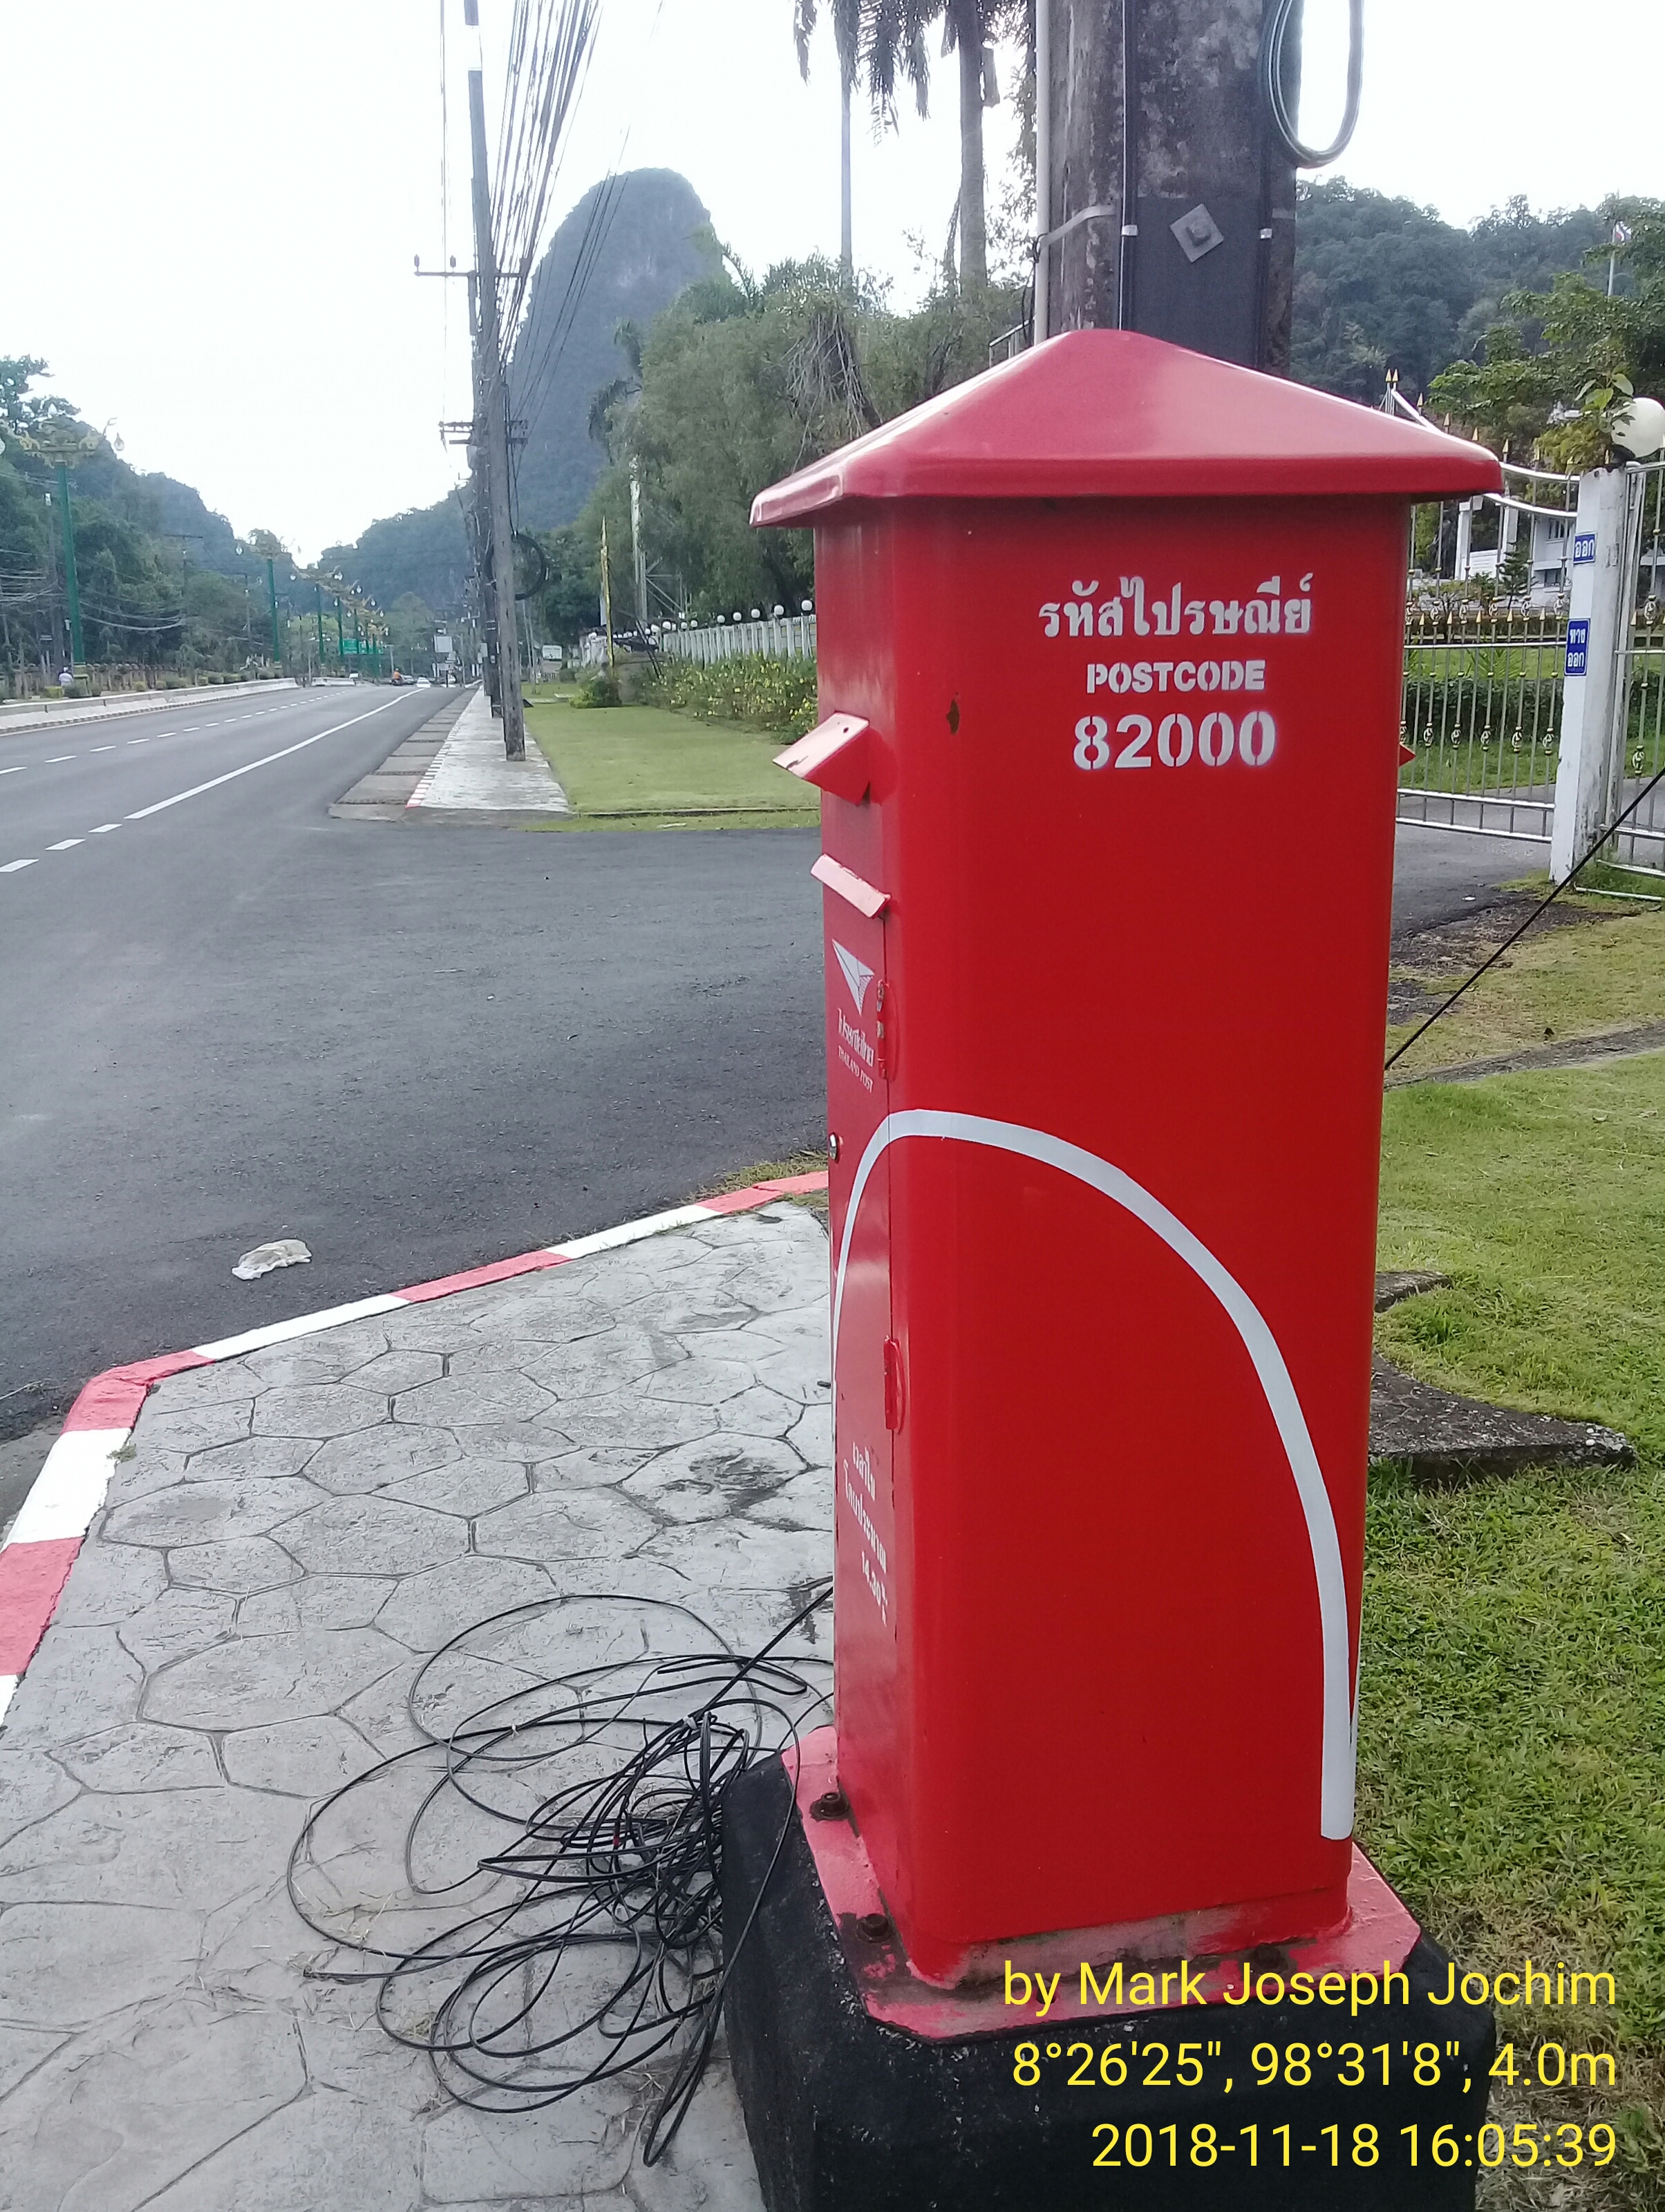 Square Thailand Post pillar box in the center of Phang Nga Town, Thailand. Photo taken by Mark Joseph Jochim on November 18, 2018.